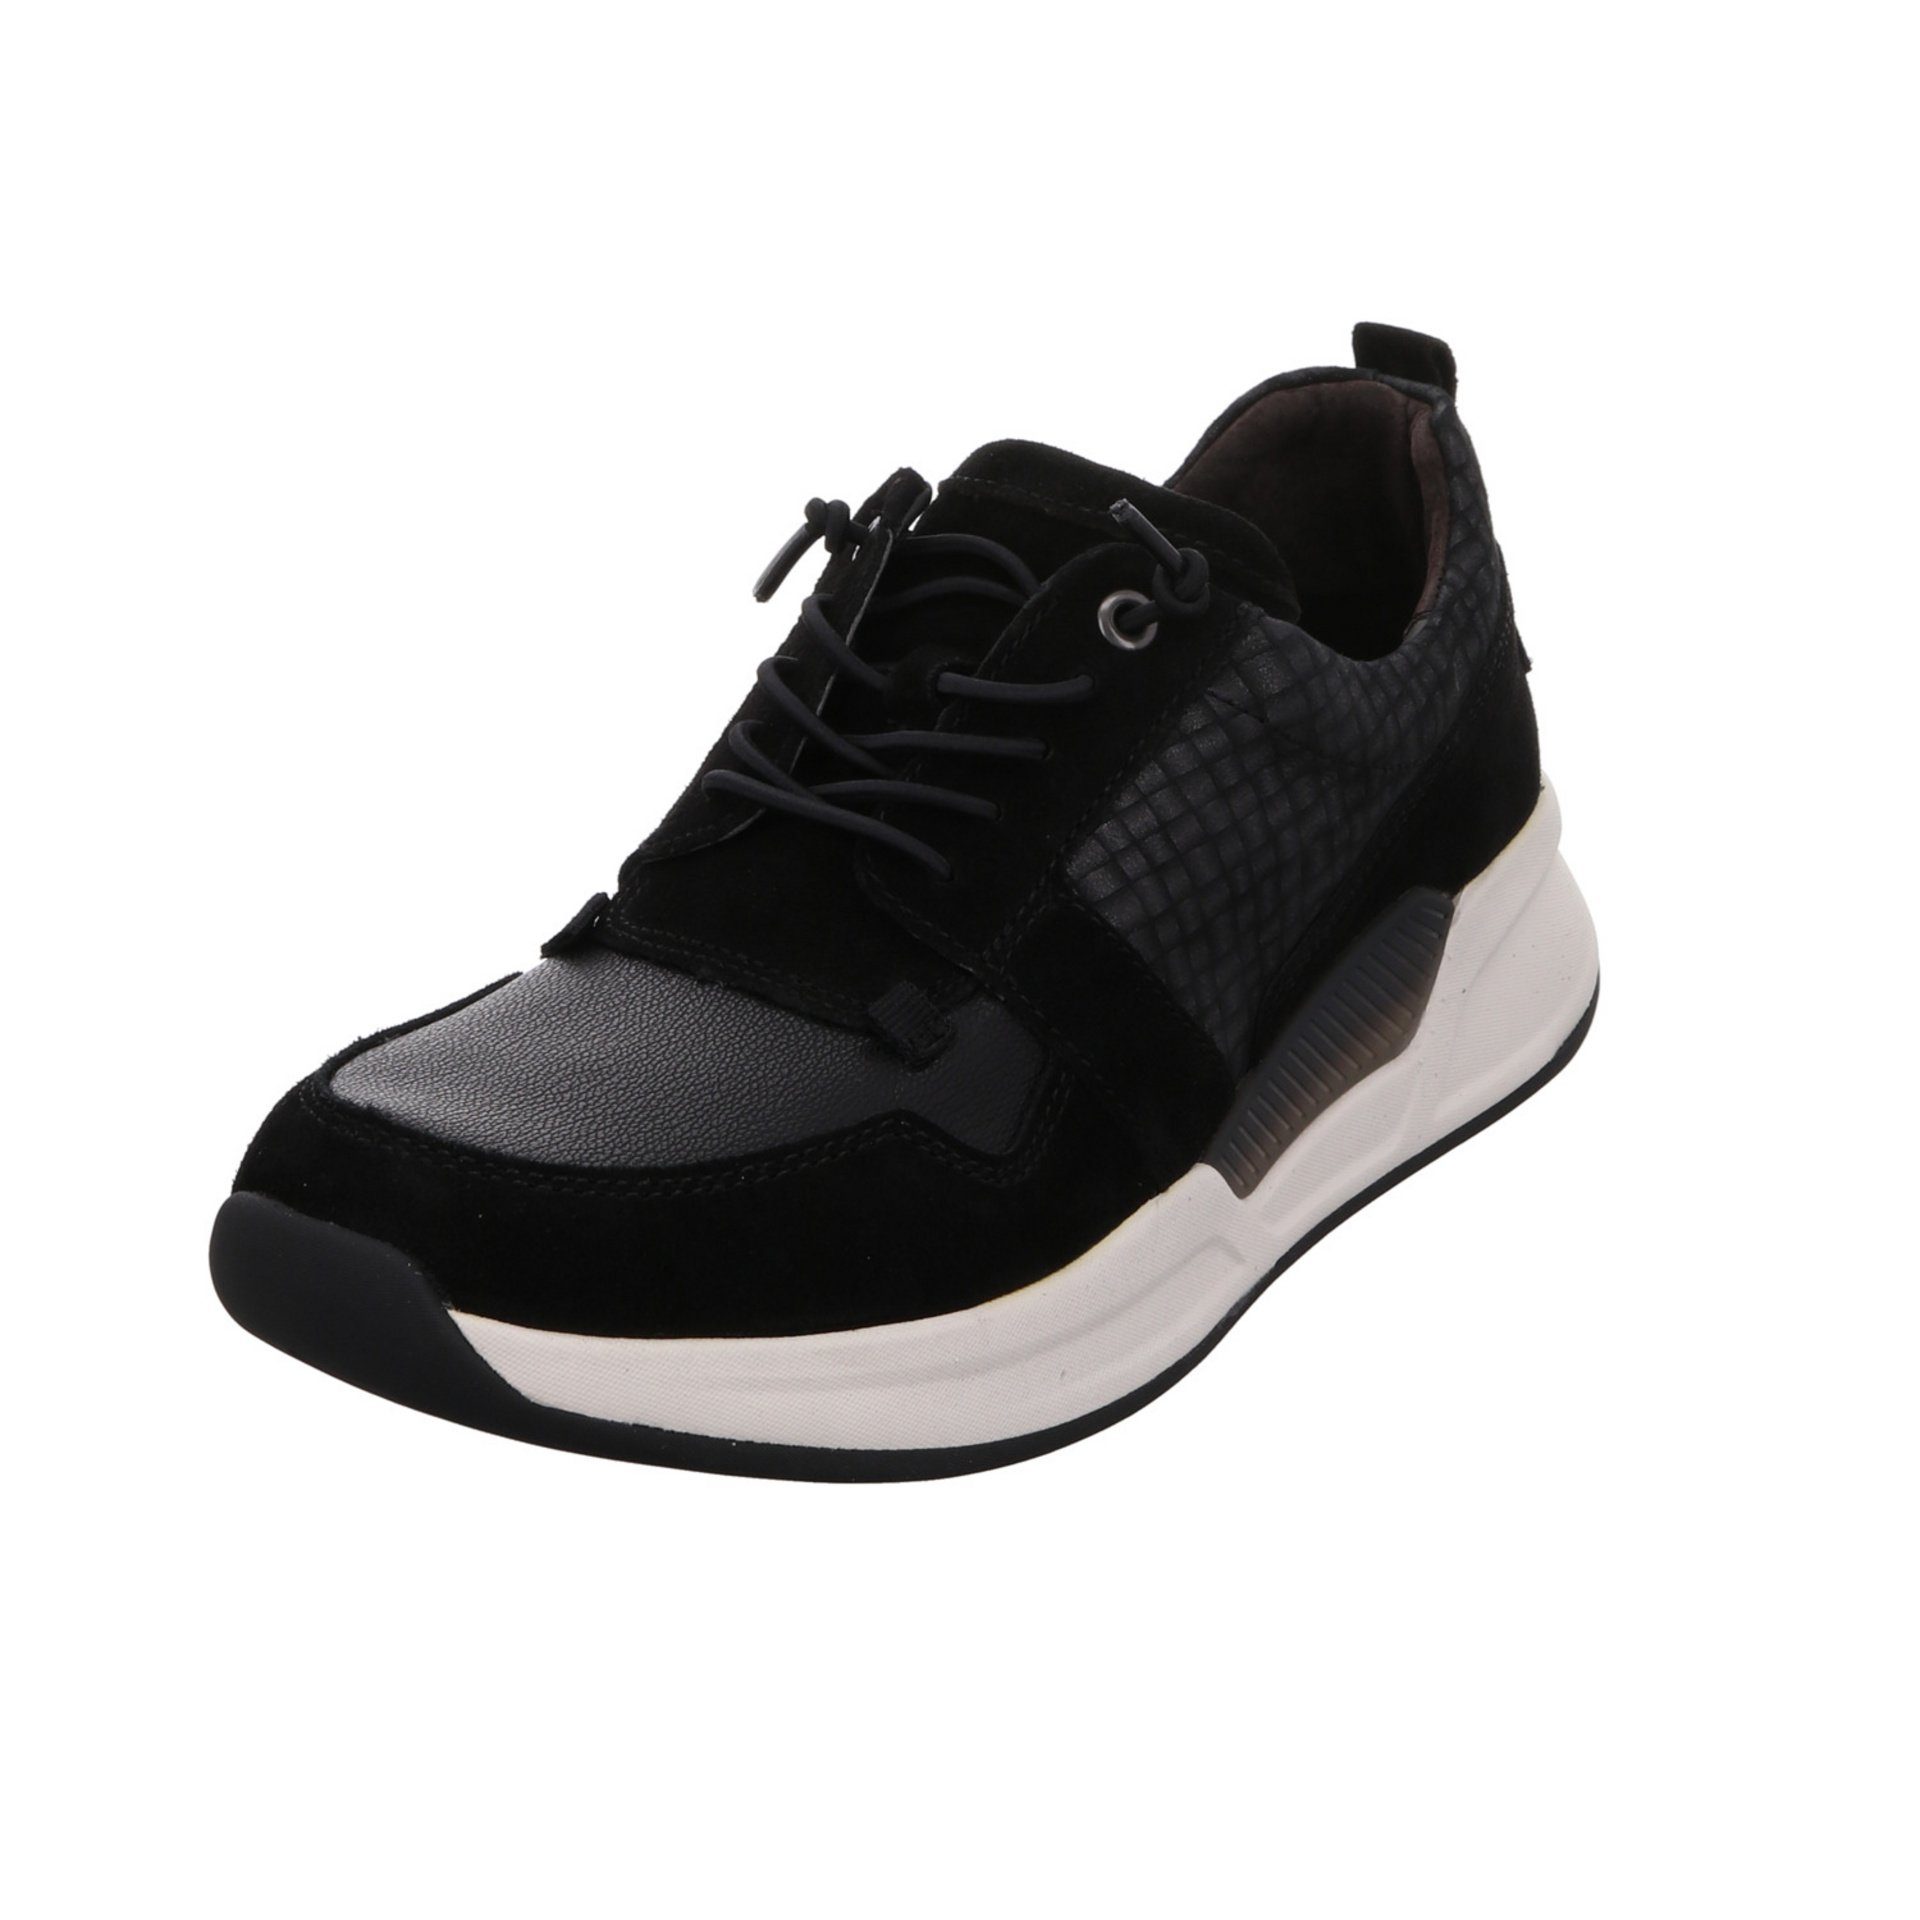 Gabor 87 Sneaker / Schuhe schwarz Lederkombination Rollingsoft Sneaker Schnürschuh Damen